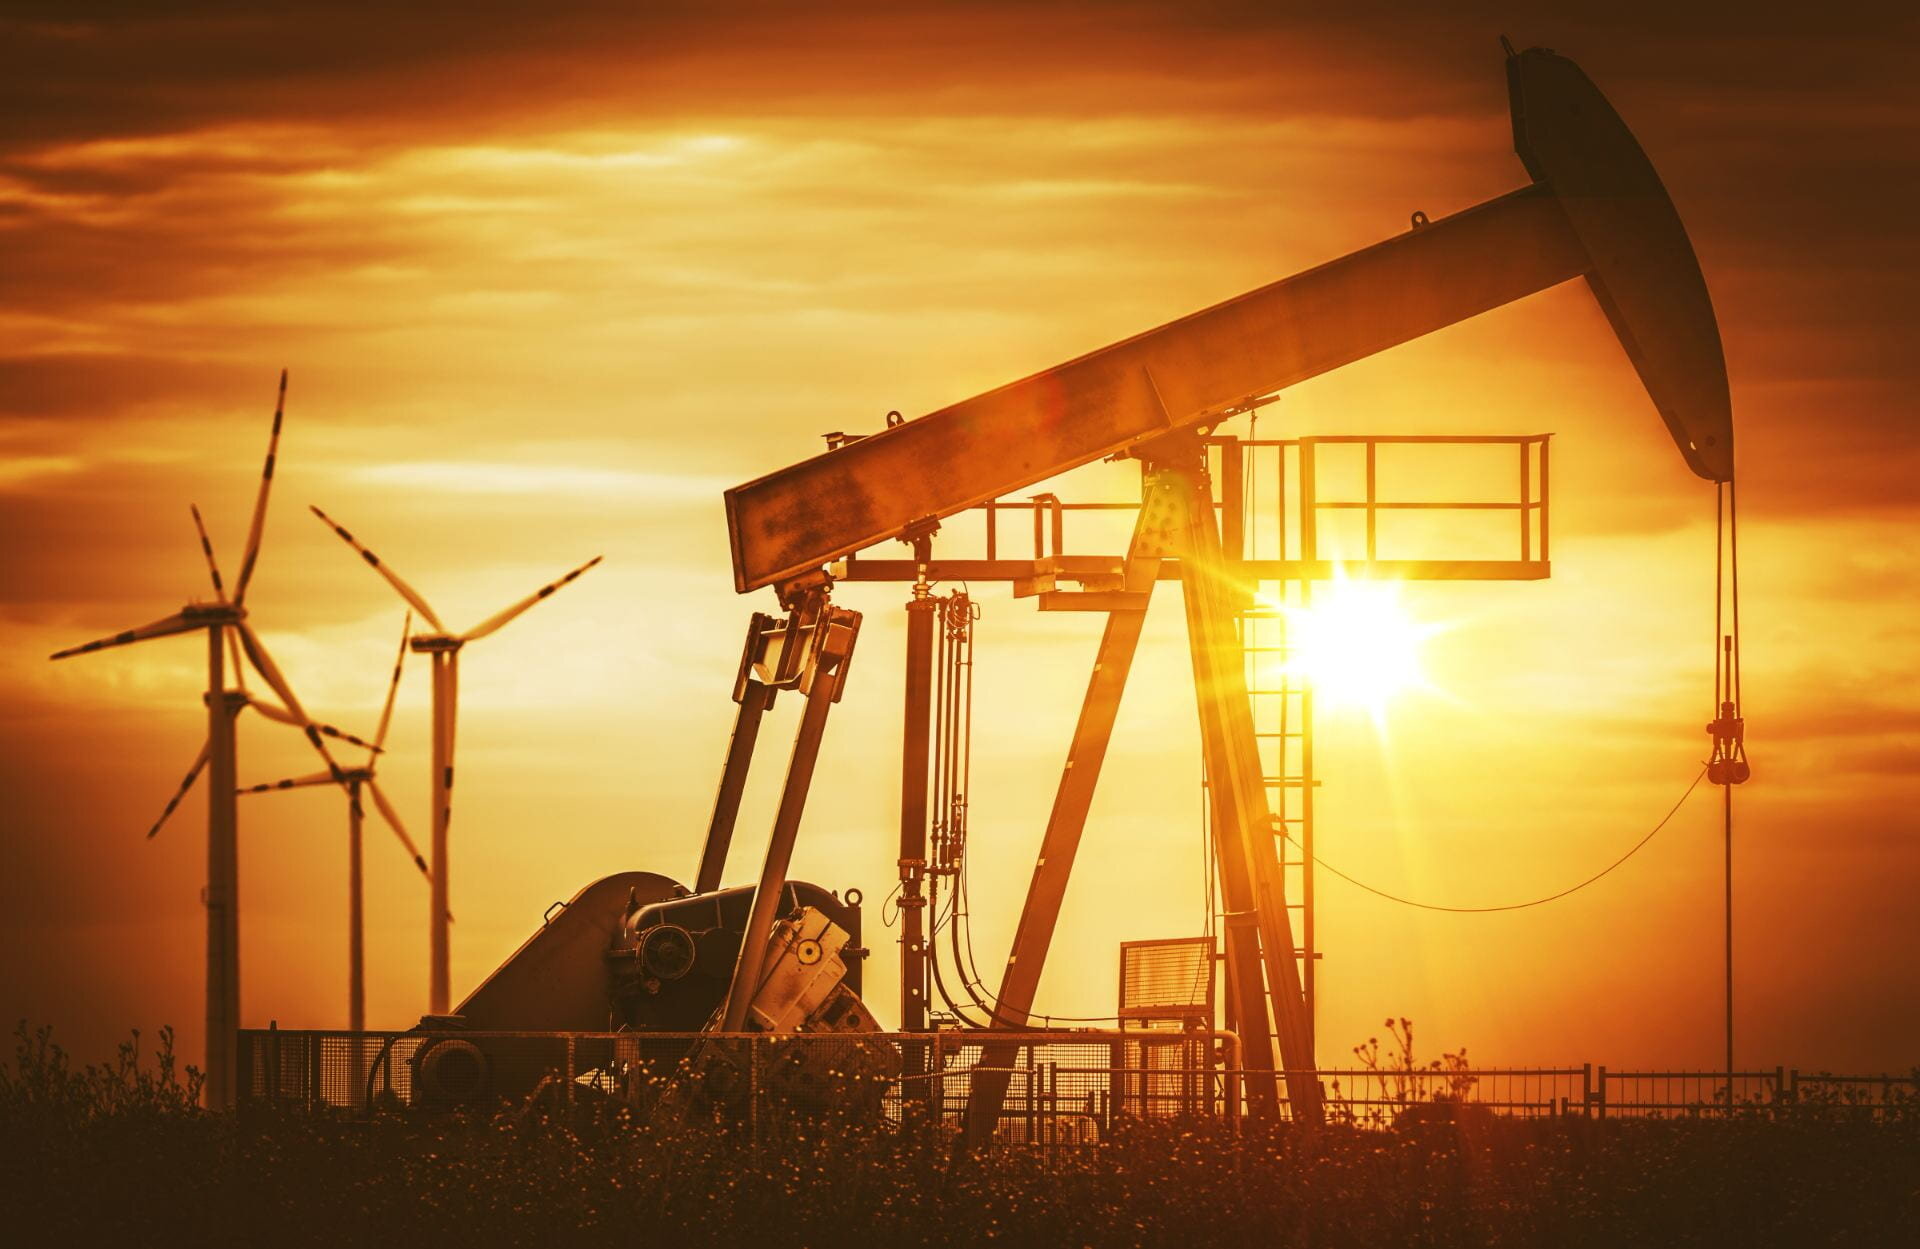 fossil fuel drilling plans undermine pledges